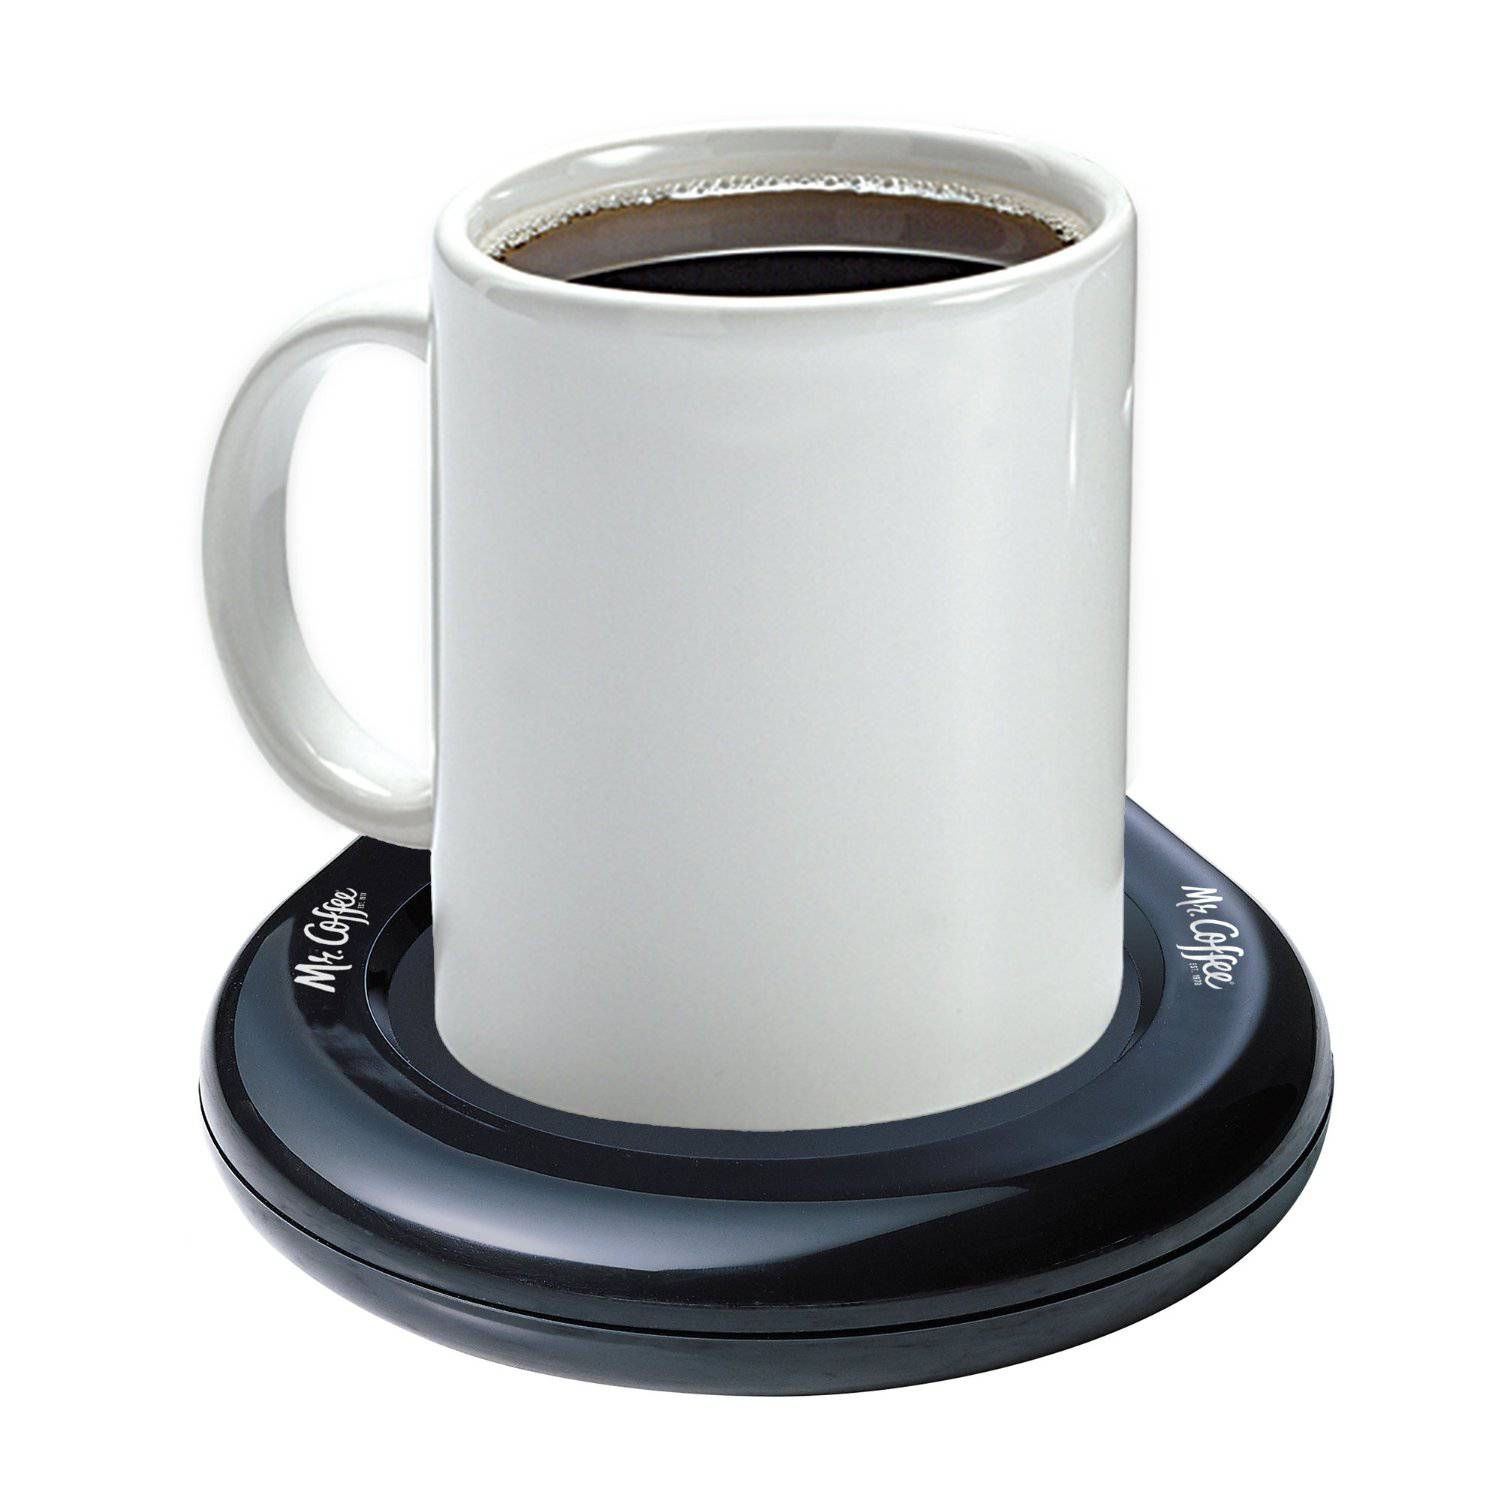 Mr. Coffee Mug Warmer for Office Home Use